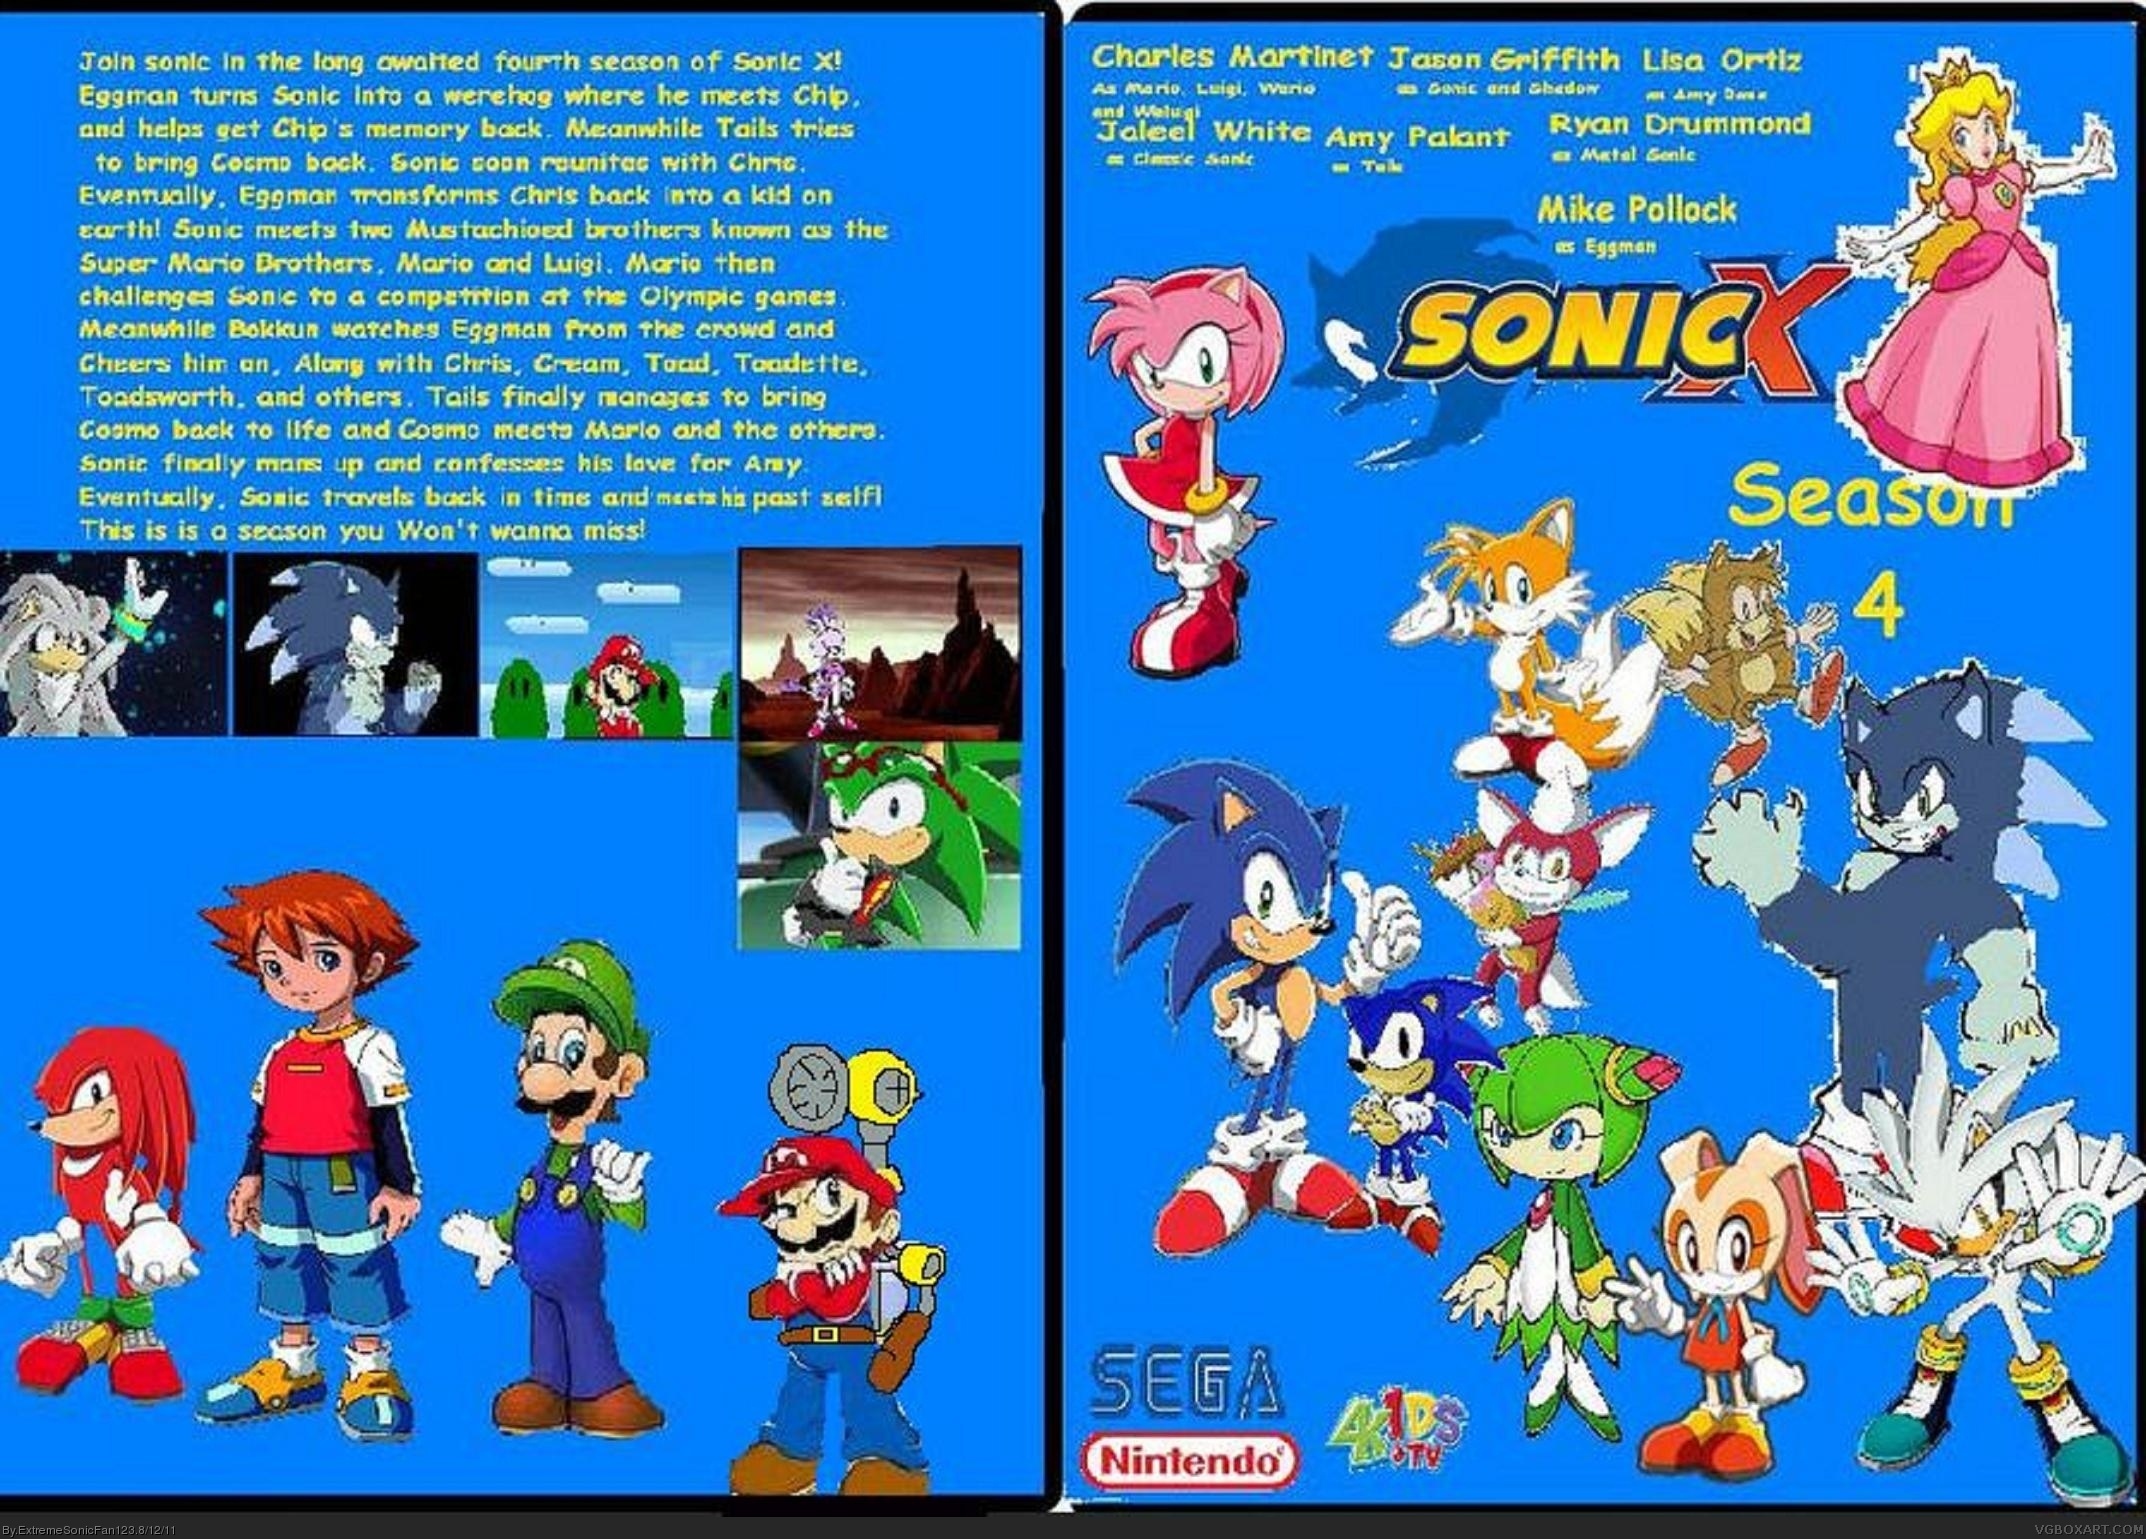 Sonic X Season 4 box cover